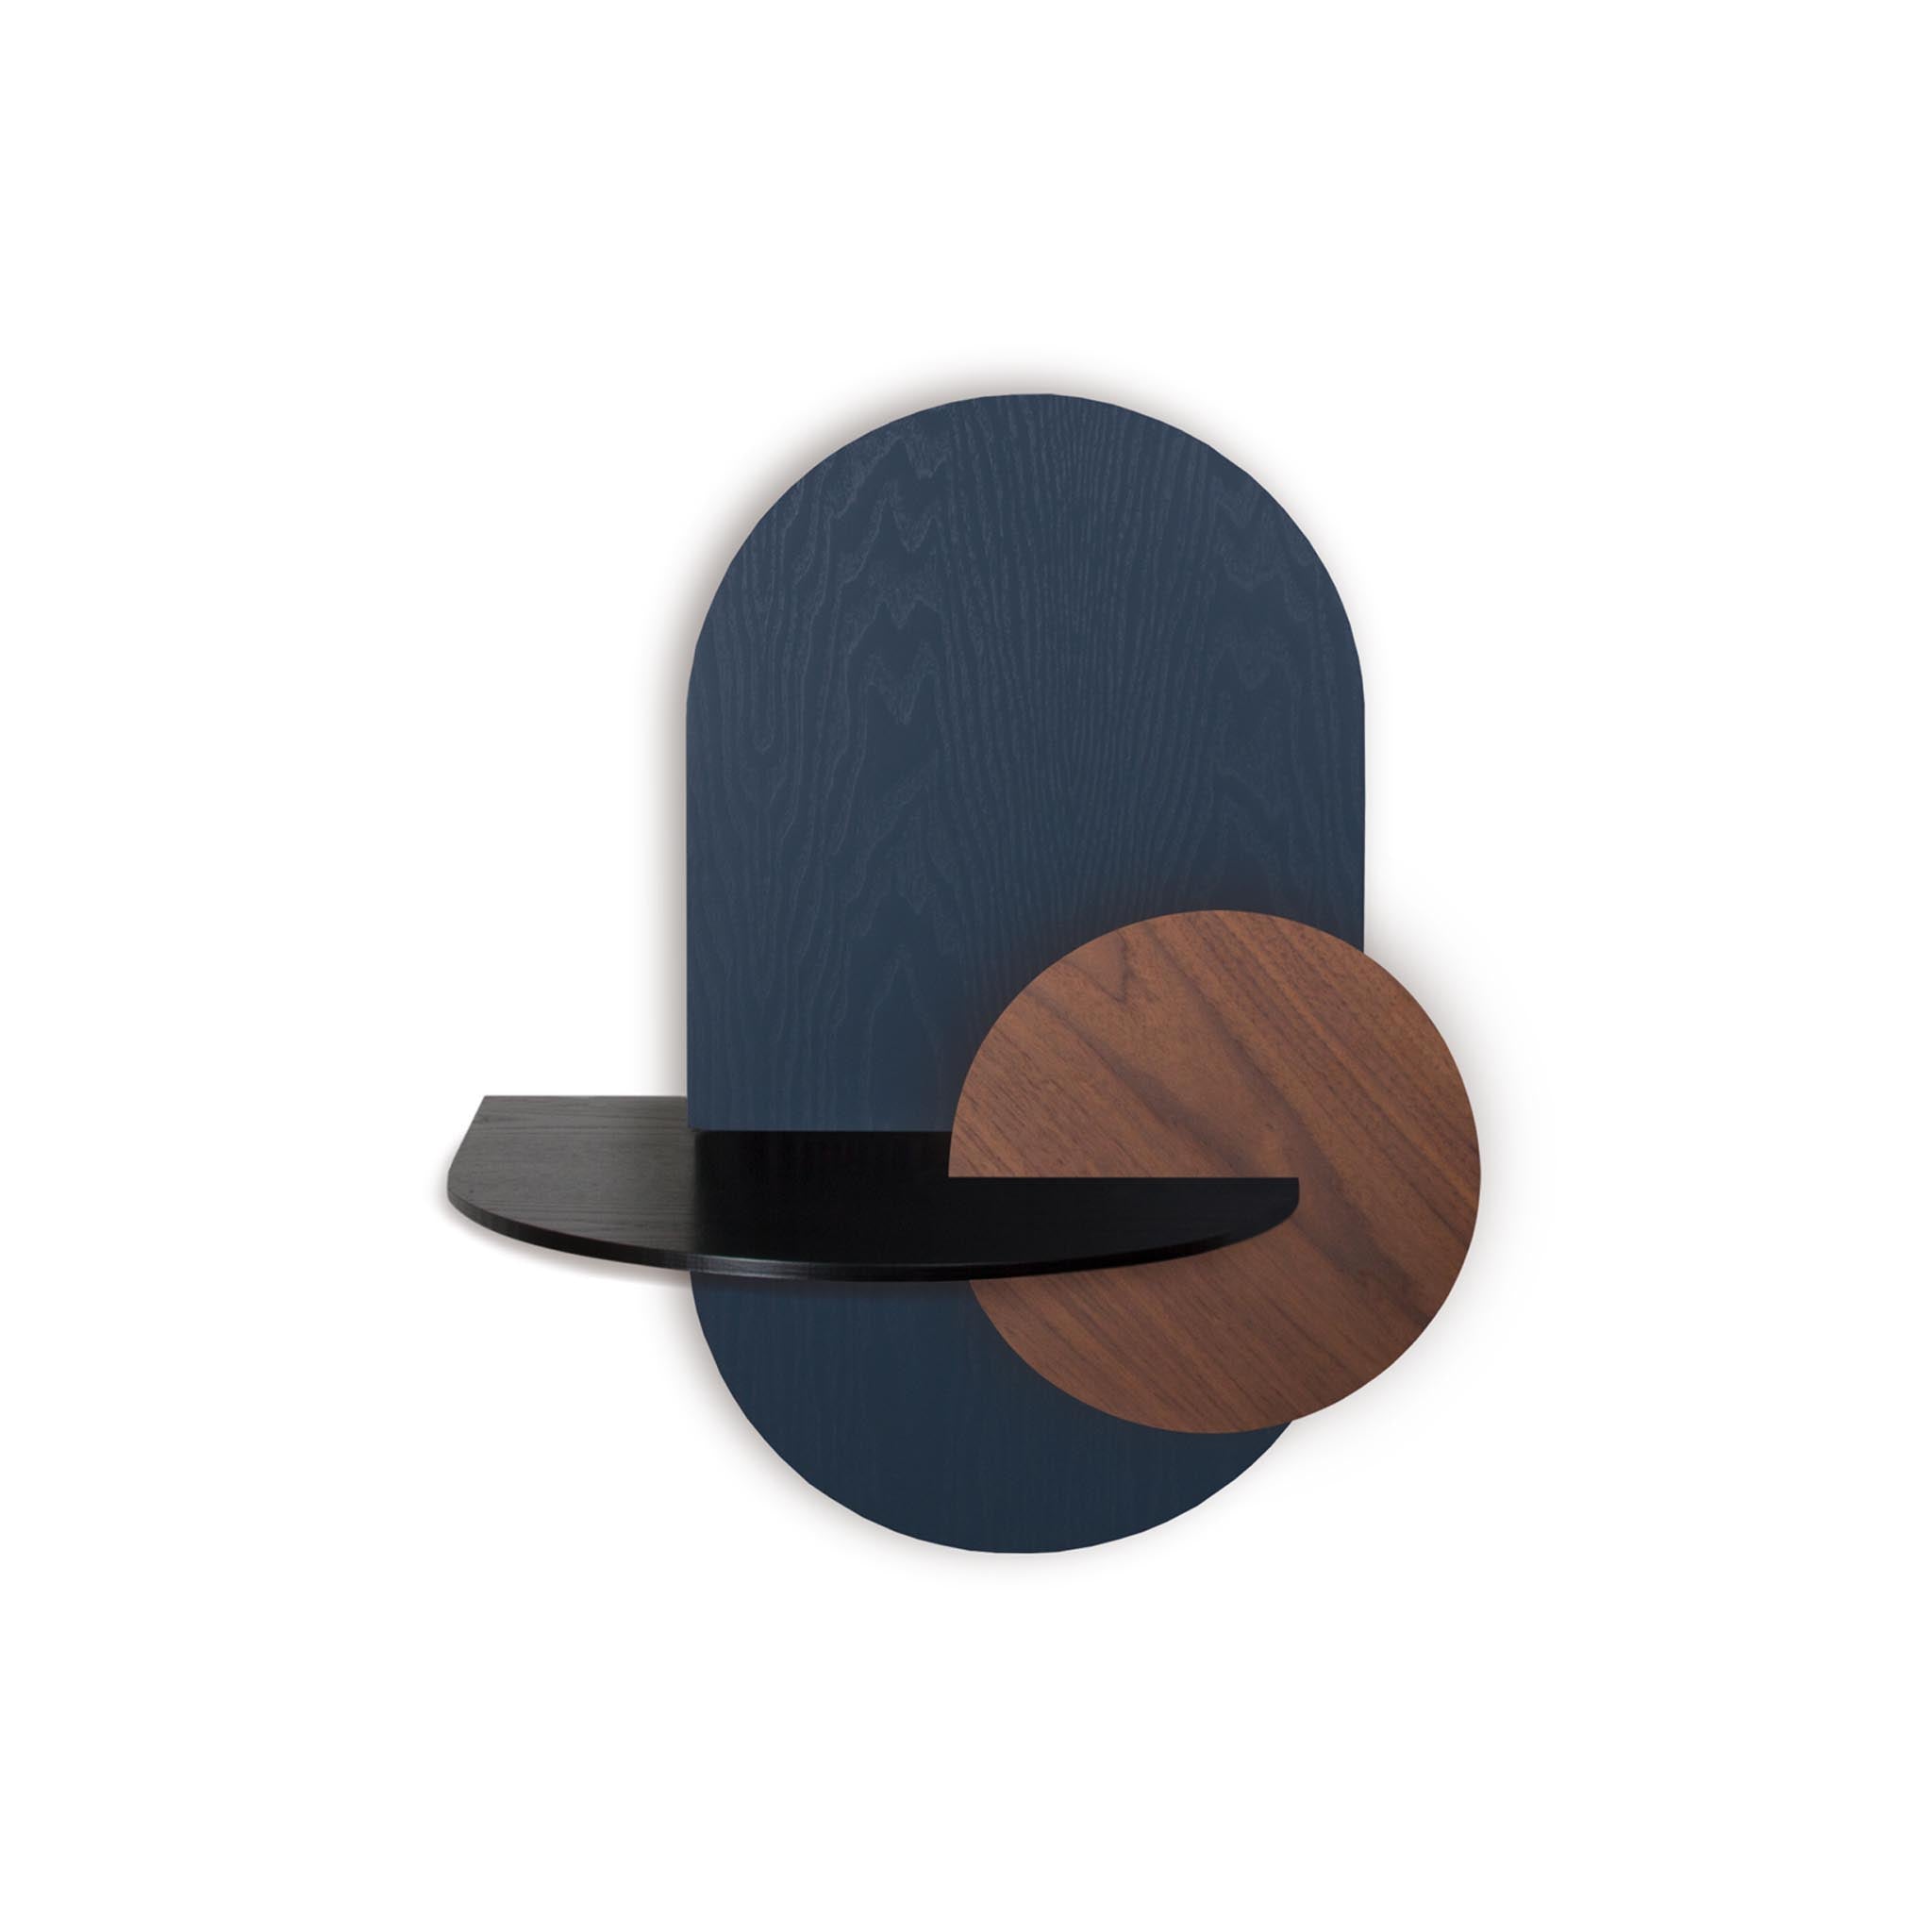 Alba floating nightstand · Blue oval